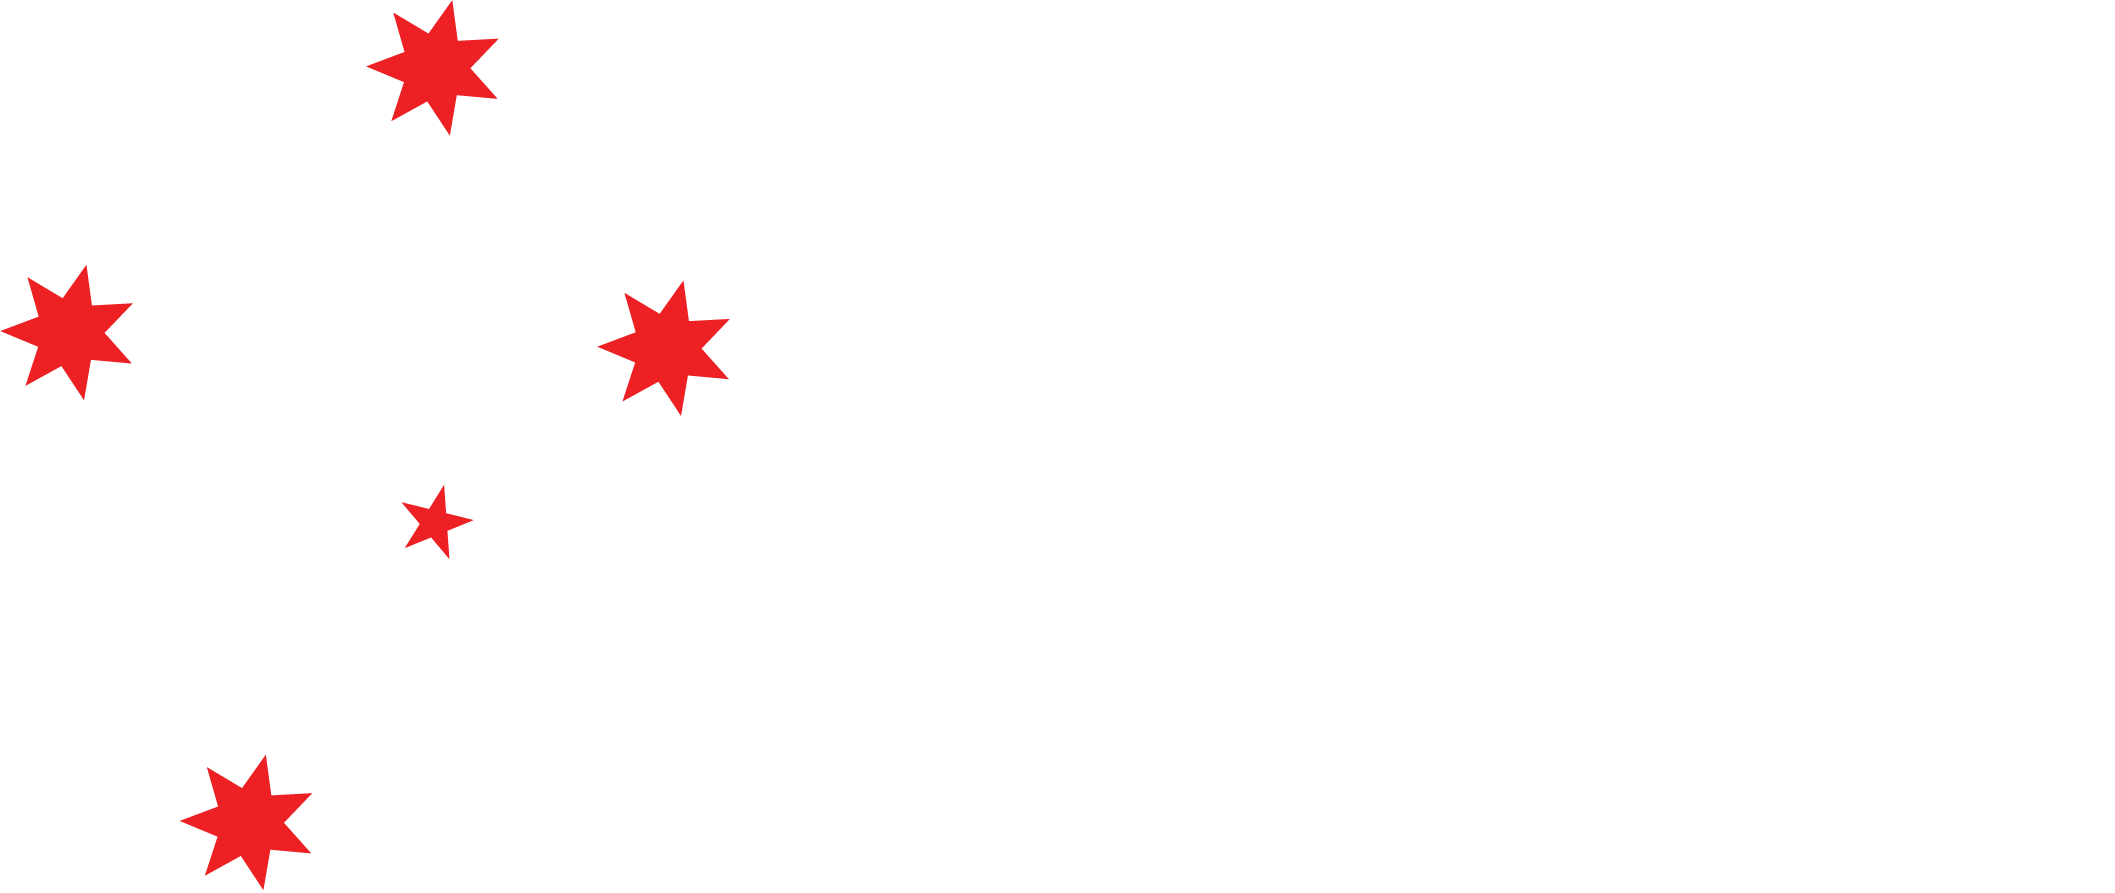 Southern Cross Caravans - Hybrid Caravans, Fixed Roof Caravans, Toy Haulers and more